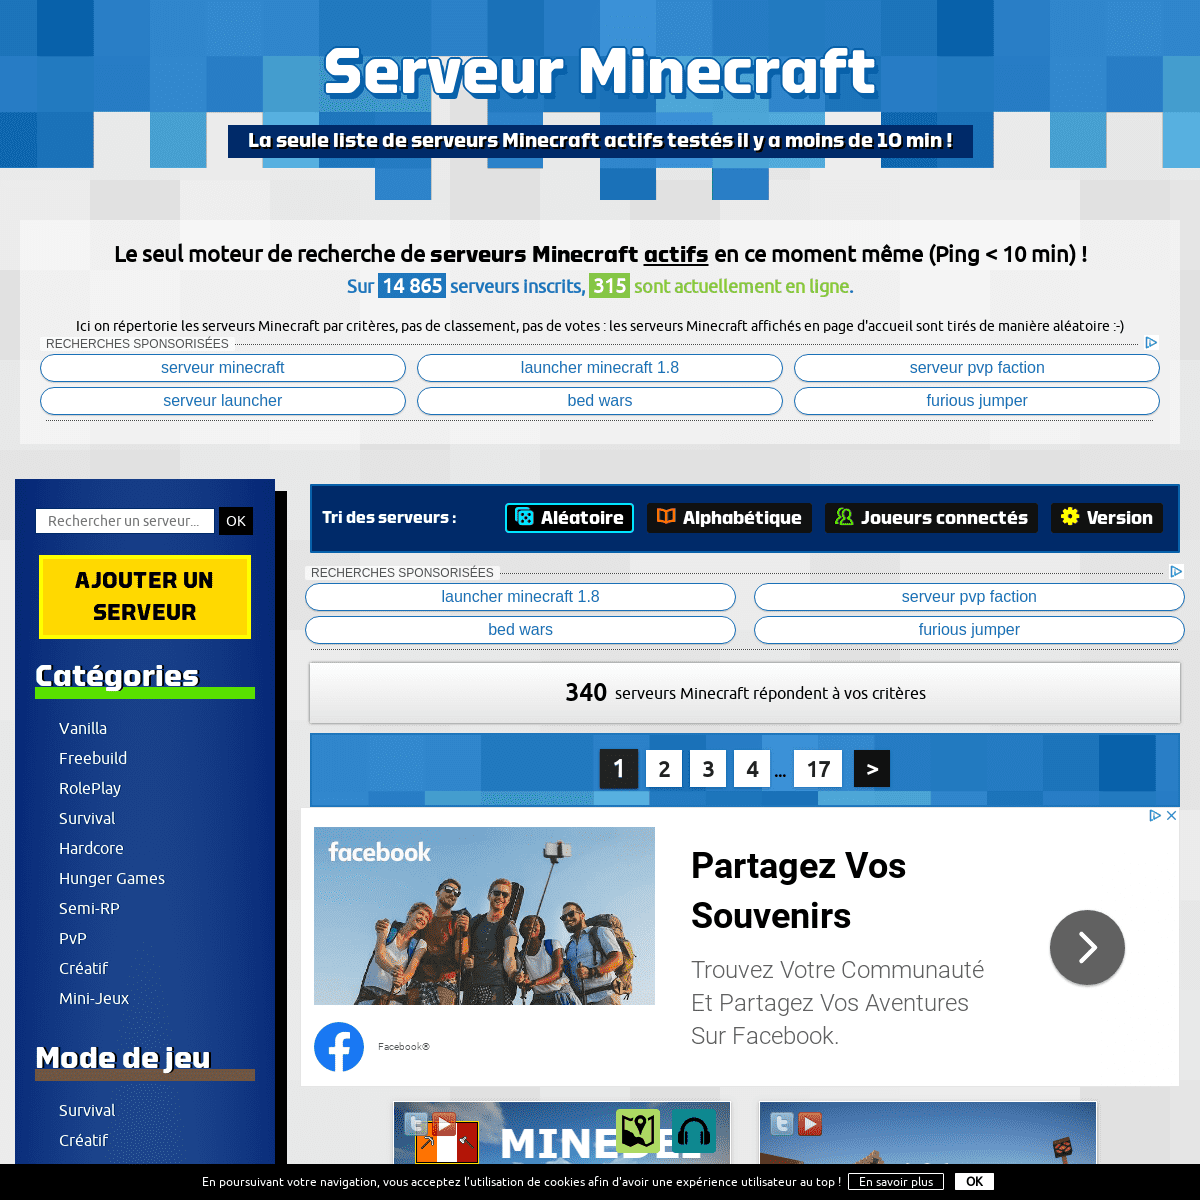 A complete backup of serveur-minecraft.eu